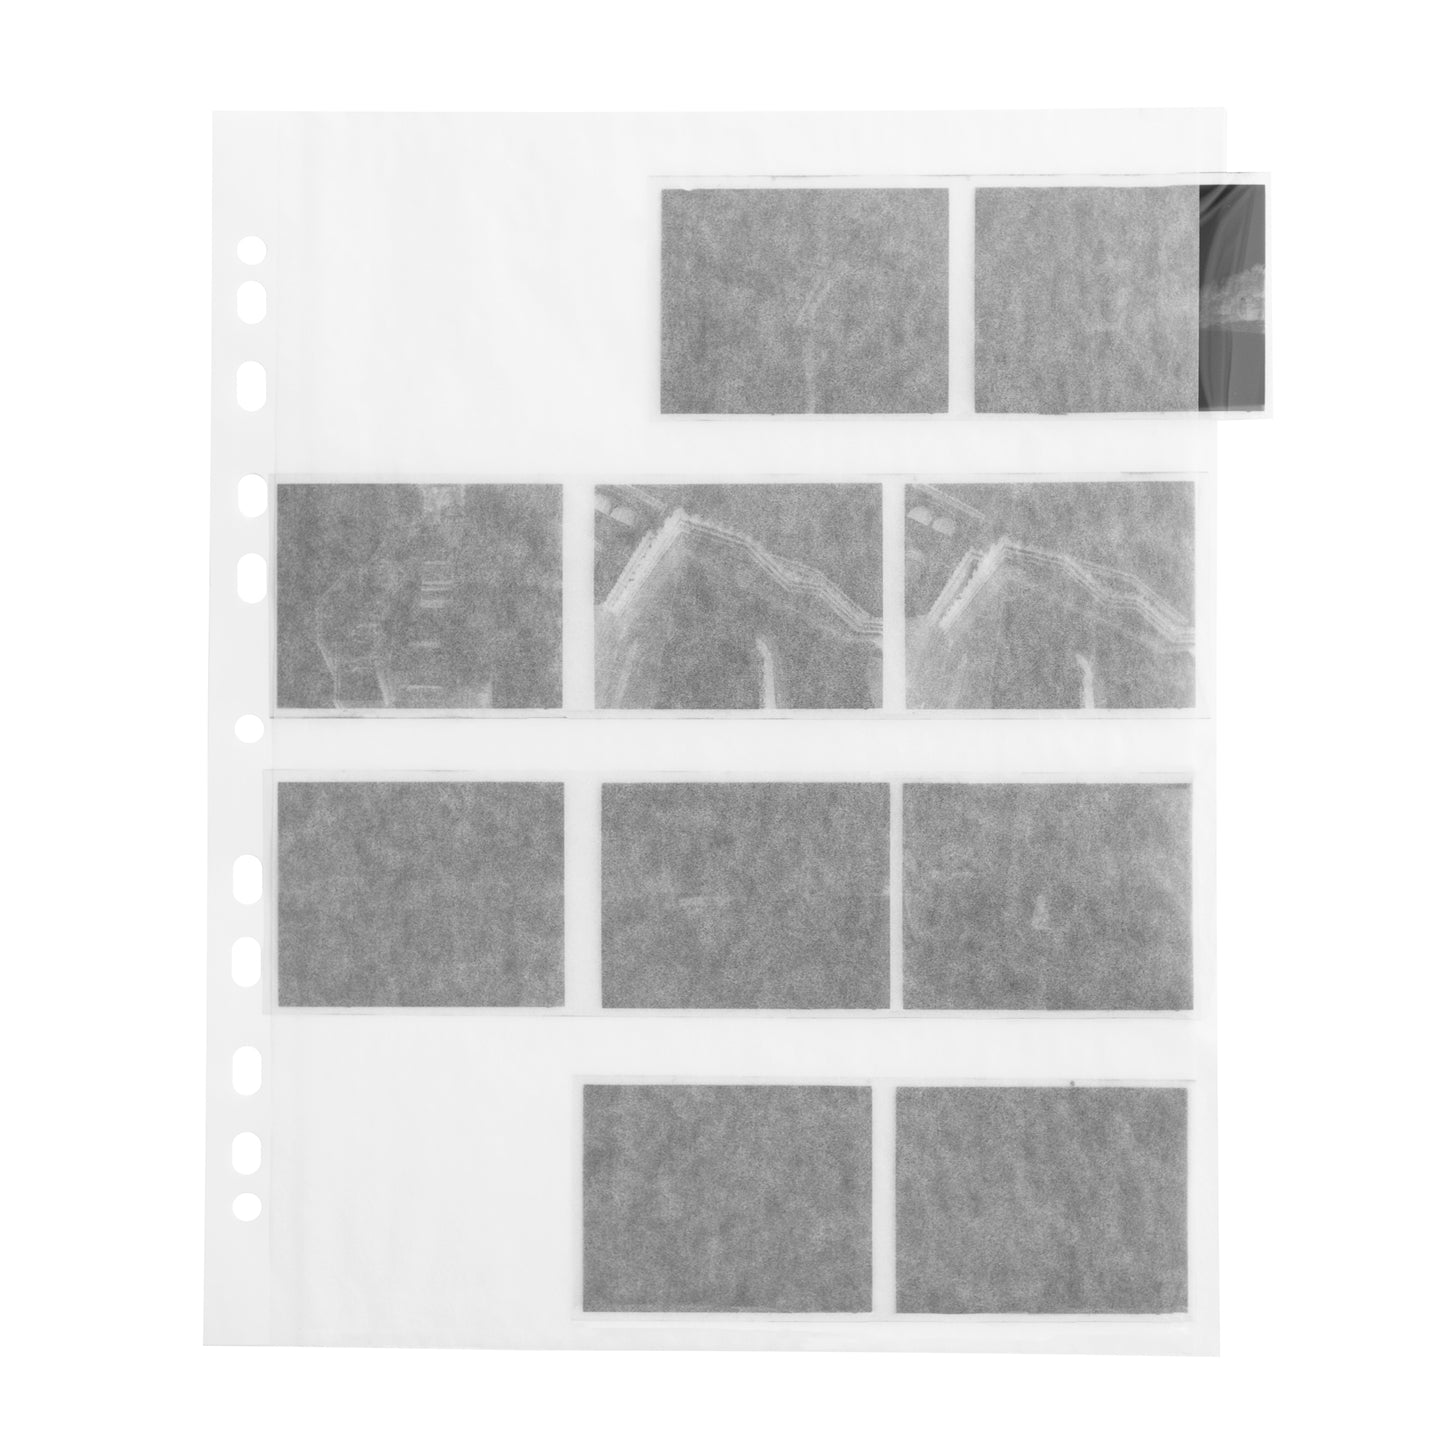 FOTOIMPEX Negatiivilehti 120-filmille (6x7, 6x6, 6x9), 25 arkkia